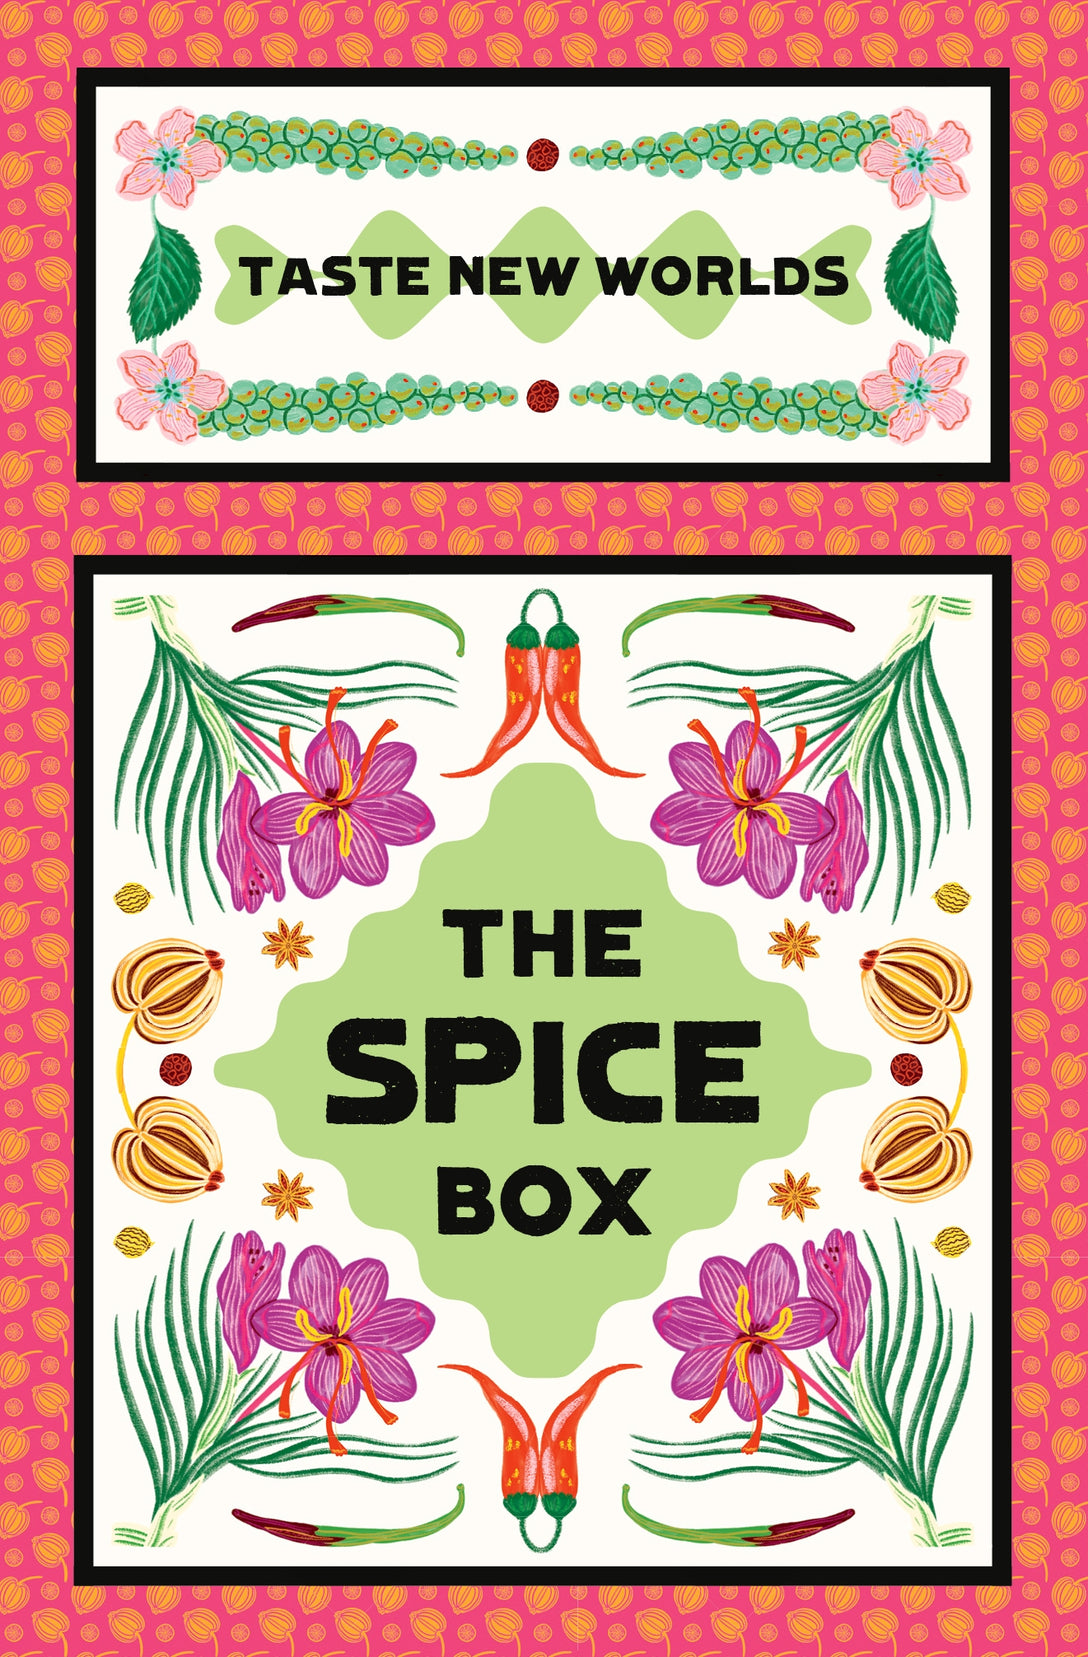 The Spice Box by Camilla Perkins, Emily Dobbs